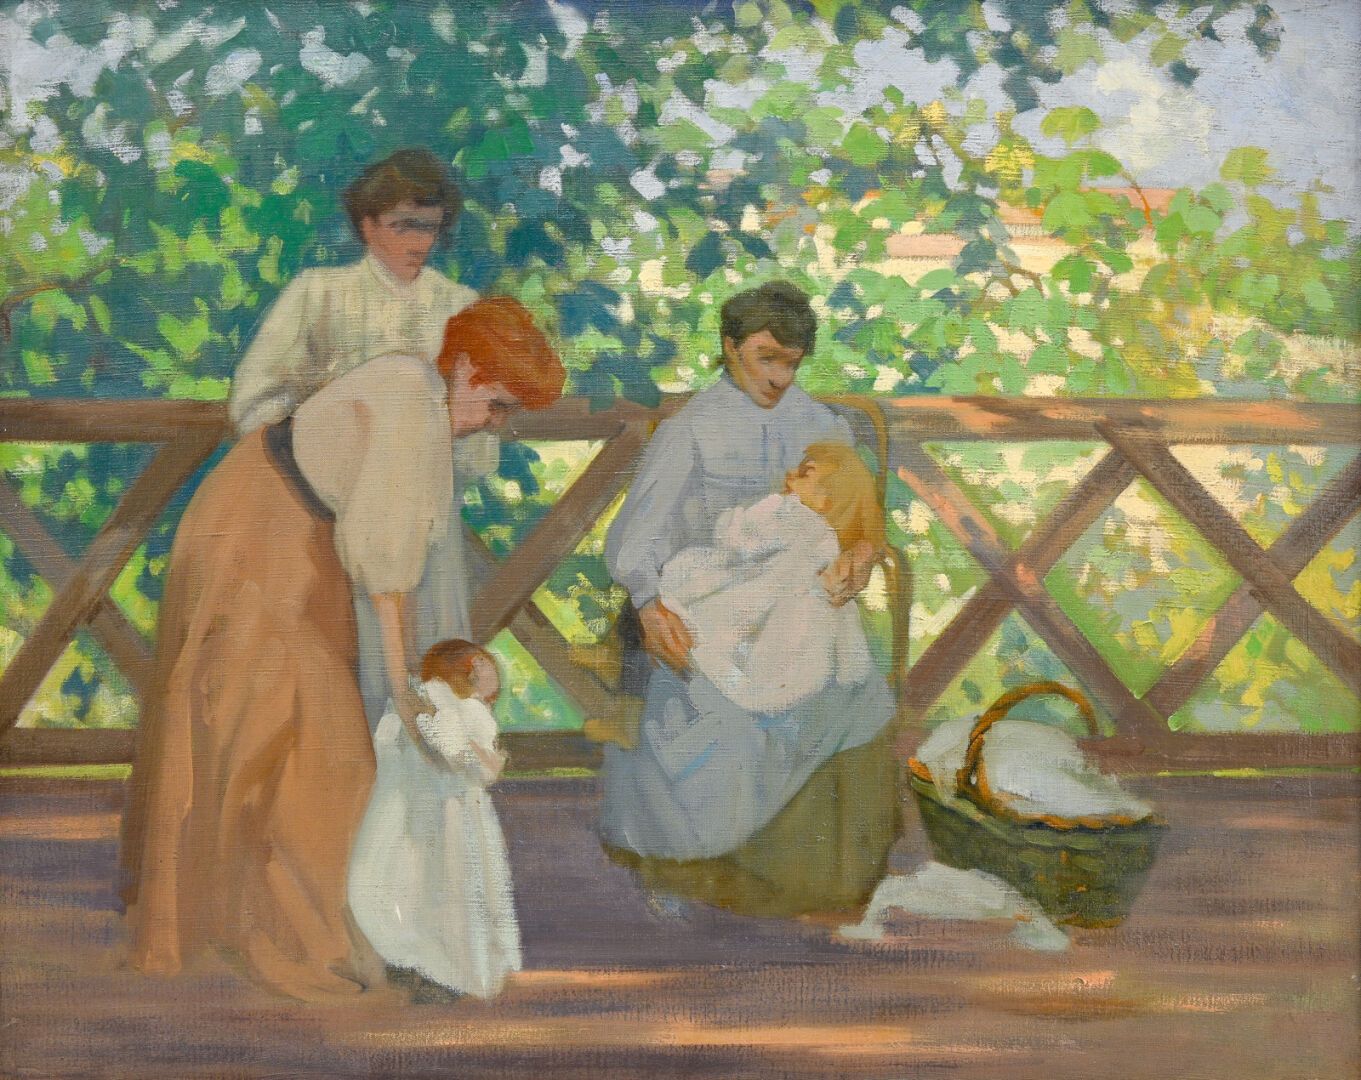 Null Henri HOURTAL (1877-1944)
Le balie 
Olio su tela 
65 x 81 cm.